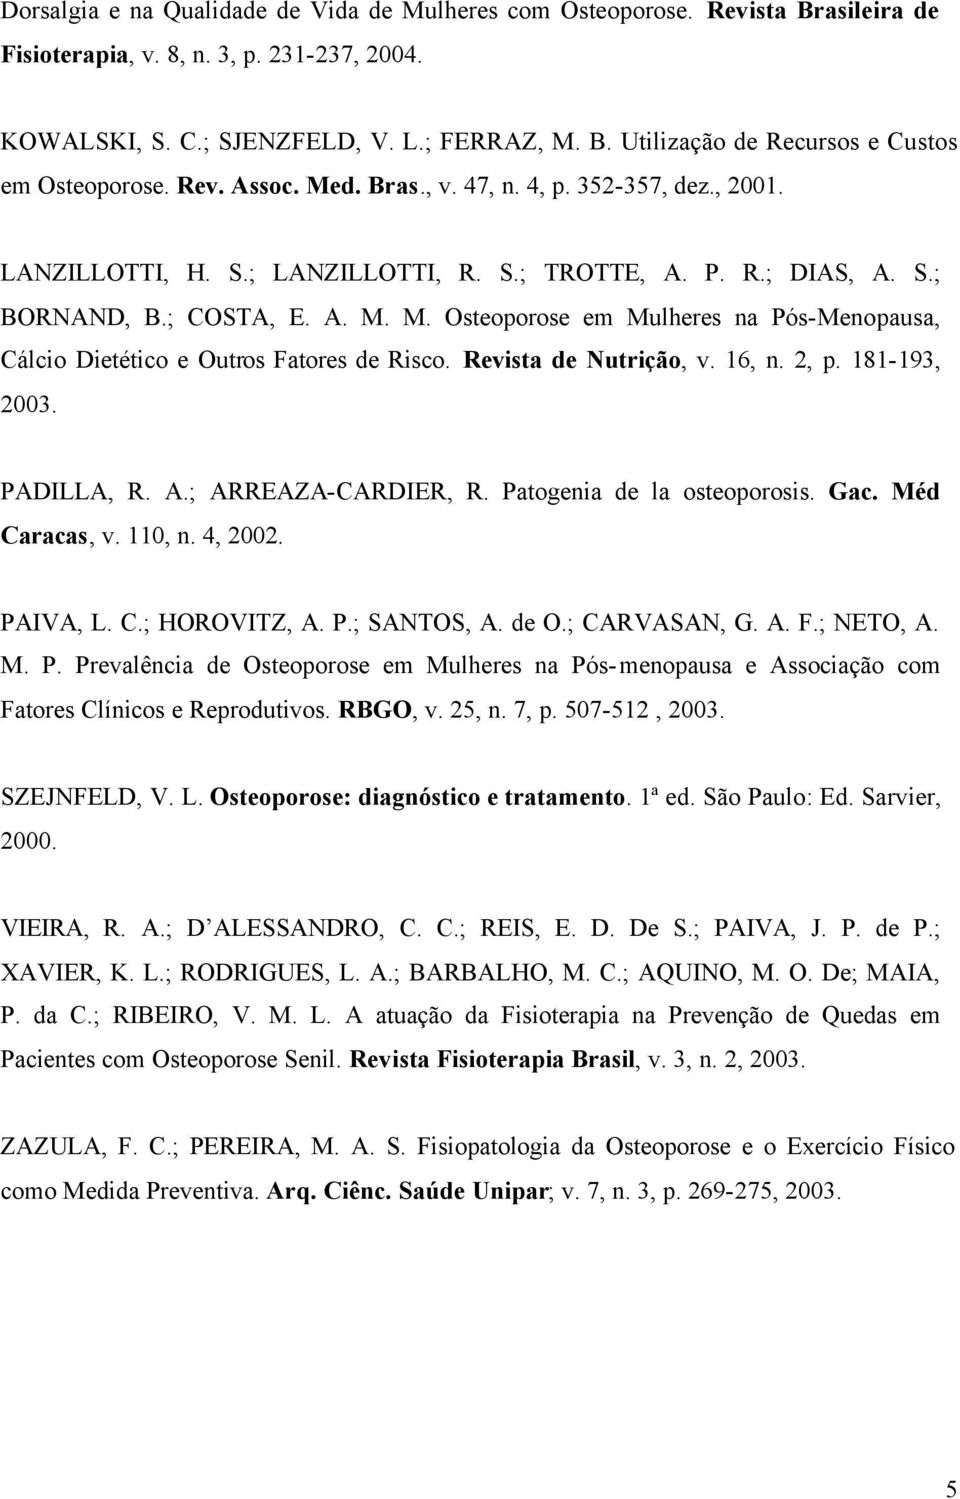 Revista de Nutrição, v. 16, n. 2, p. 181-193, 2003. PADILLA, R. A.; ARREAZA-CARDIER, R. Patogenia de la osteoporosis. Gac. Méd Caracas, v. 110, n. 4, 2002. PAIVA, L. C.; HOROVITZ, A. P.; SANTOS, A.